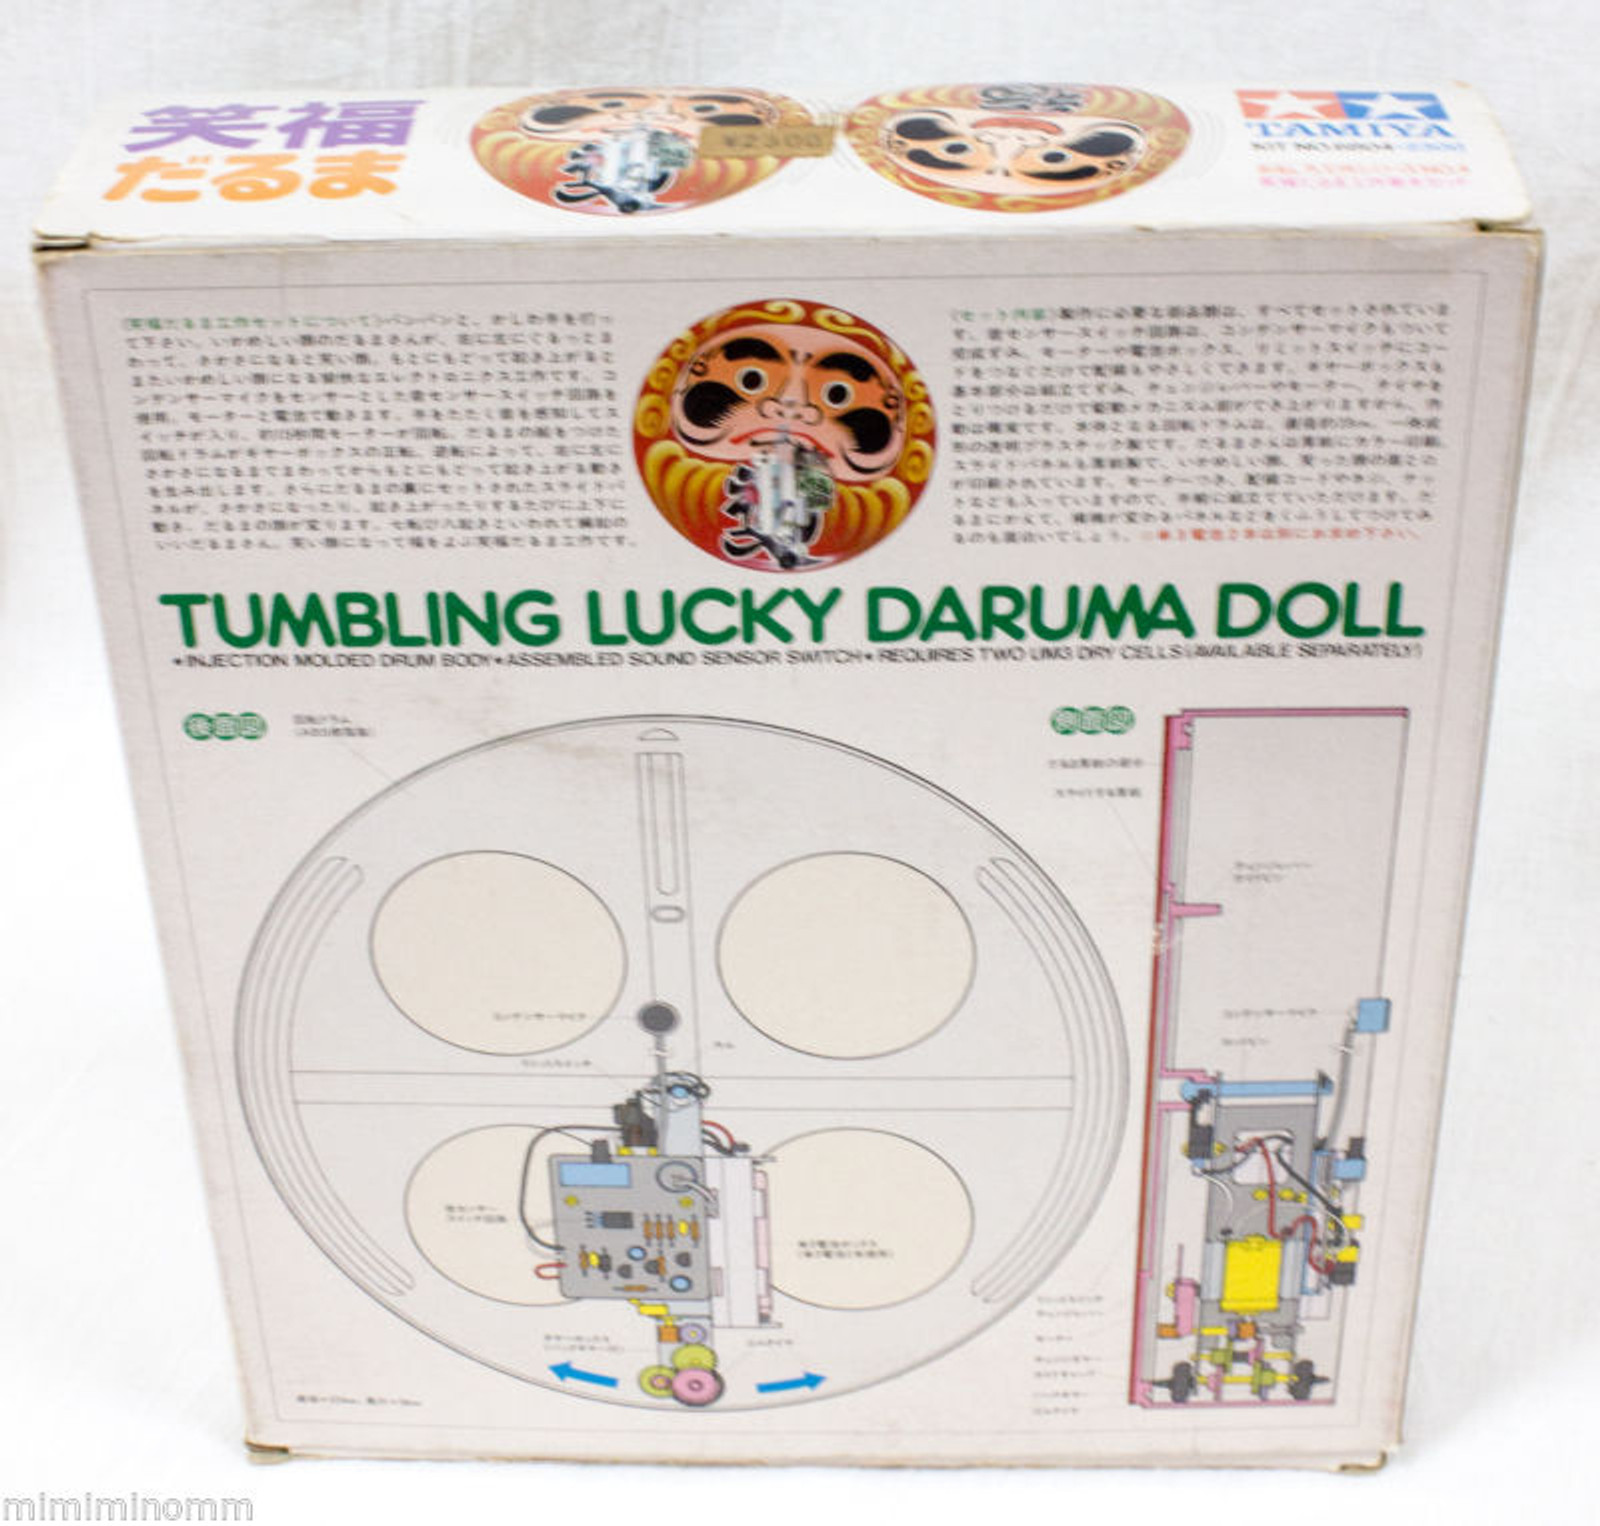 RARE Tumbling Lucky Daruma Doll Sound Senser Move Plastic Model Kit TAMIYA JAPAN